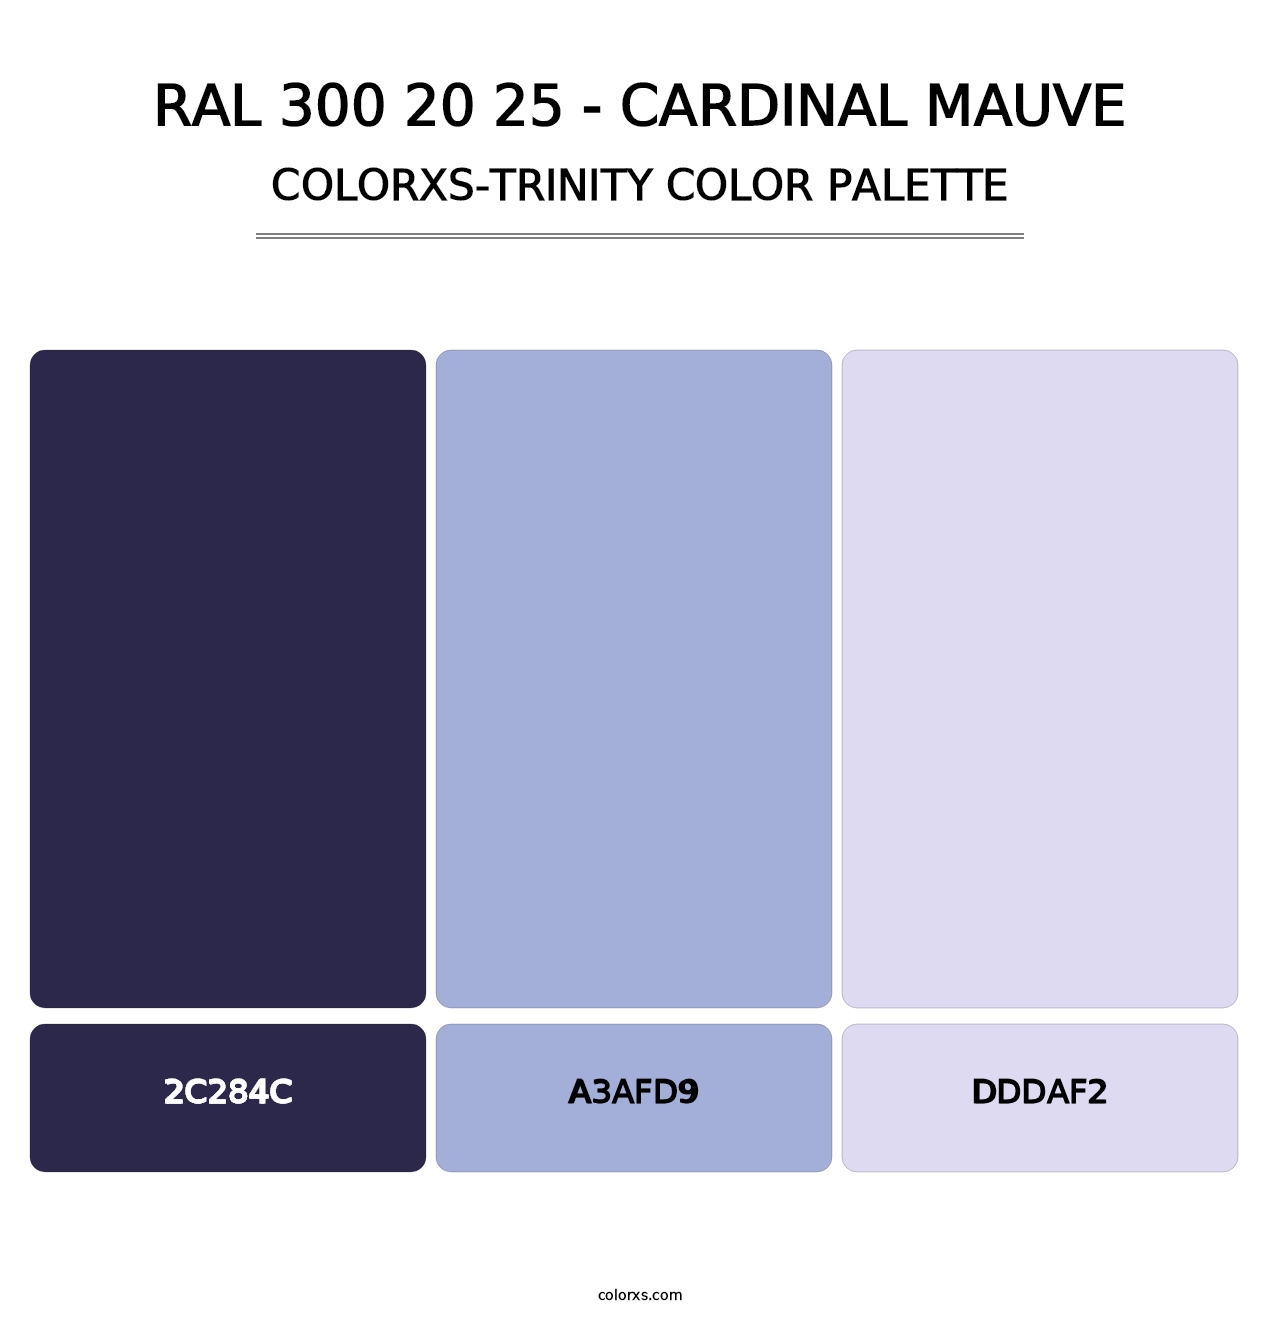 RAL 300 20 25 - Cardinal Mauve - Colorxs Trinity Palette